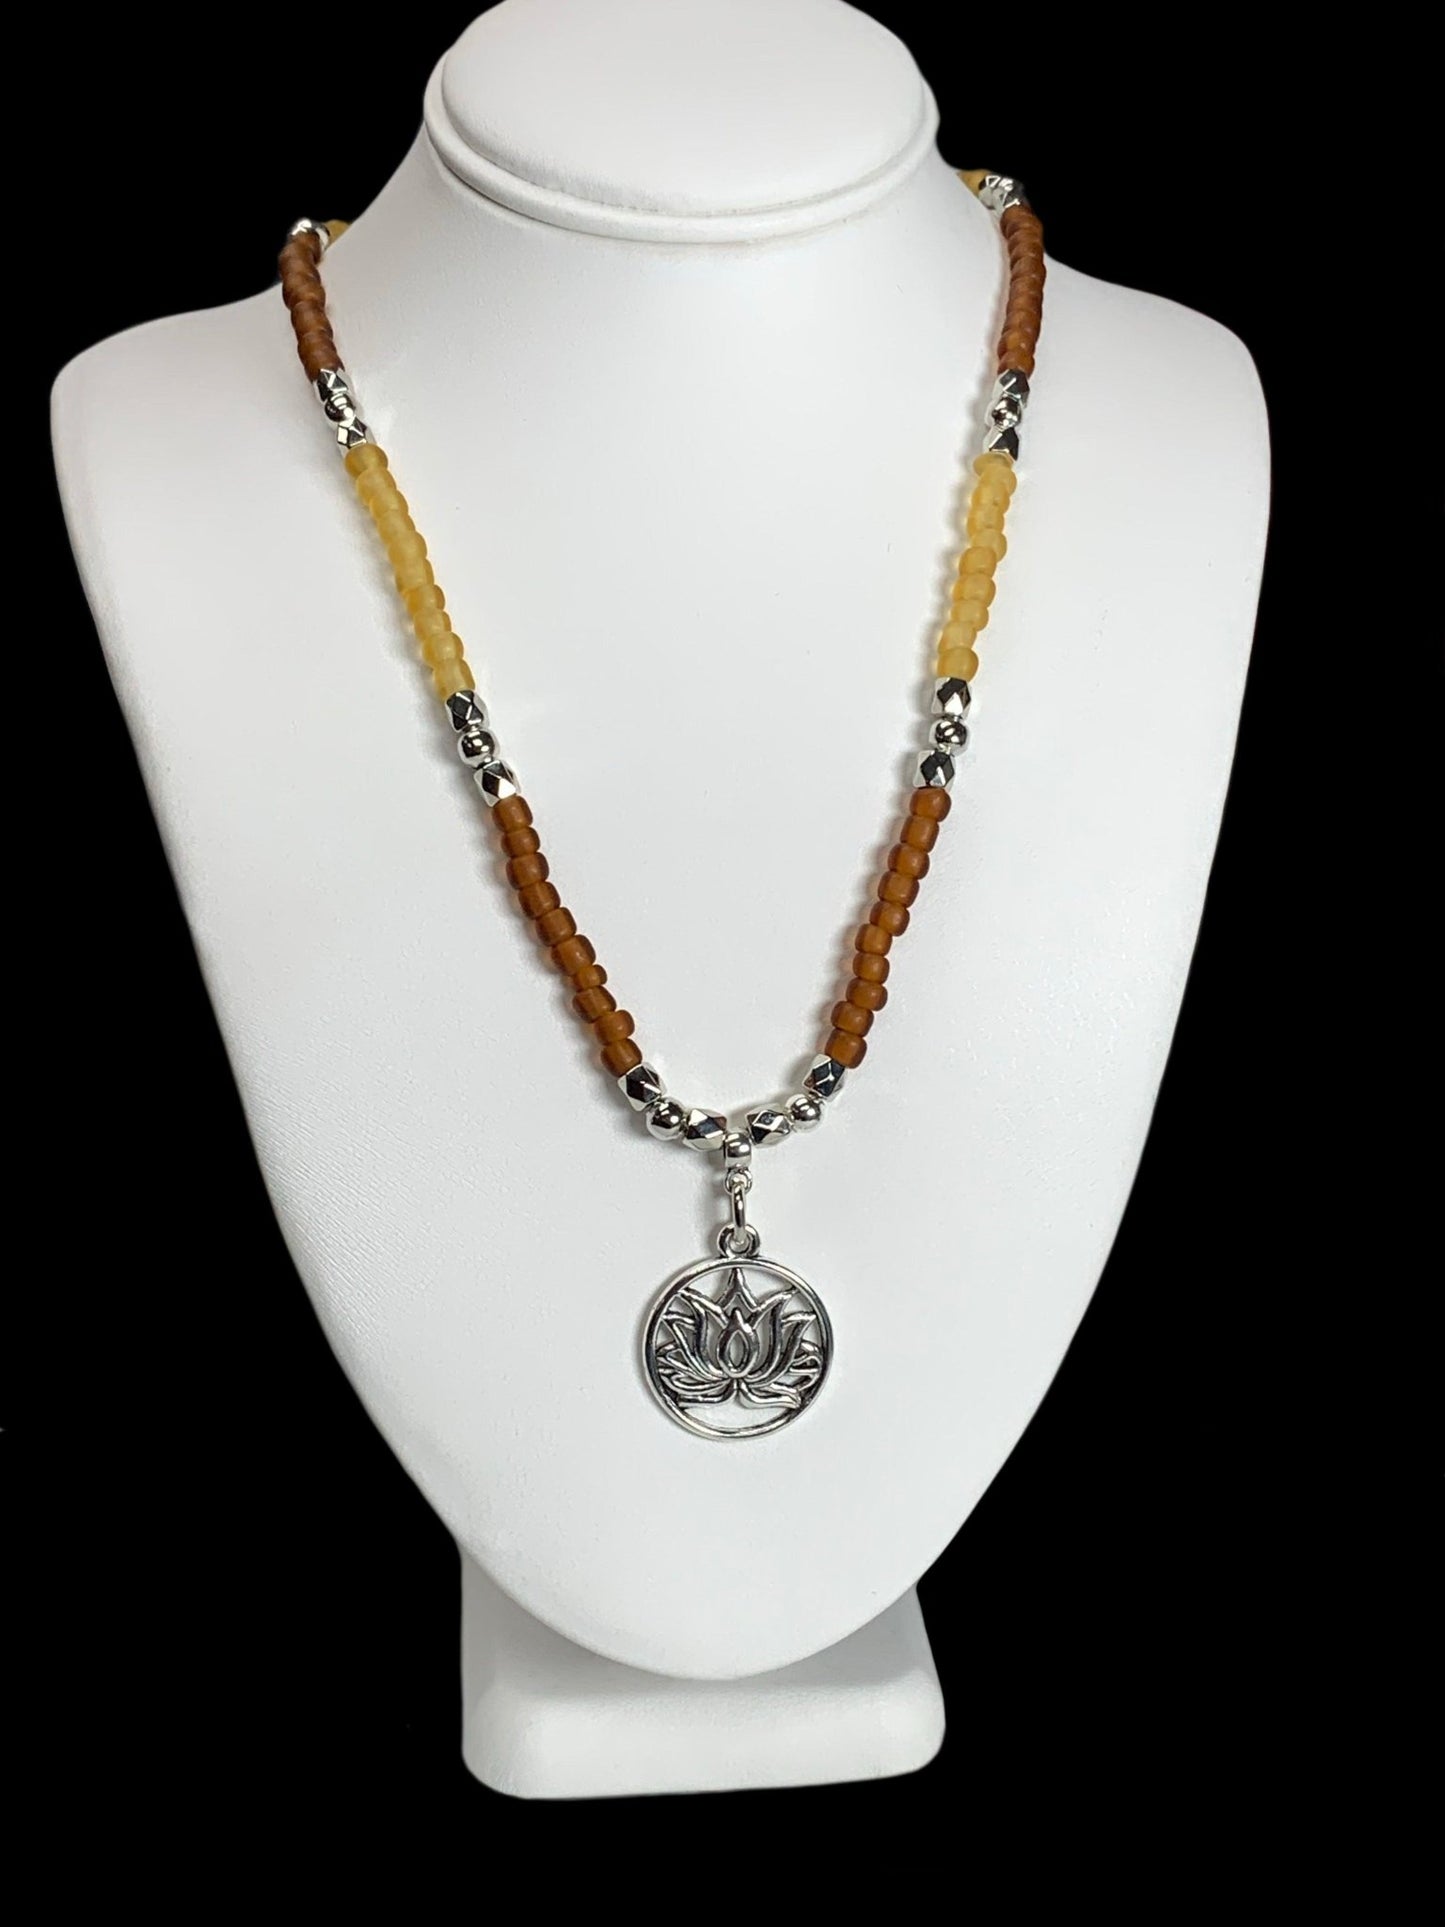 🔴SOLD🔴 Autumn Handmade Mermaid Glass Beaded Necklace with Lotus Flower Charm - Born Mystics